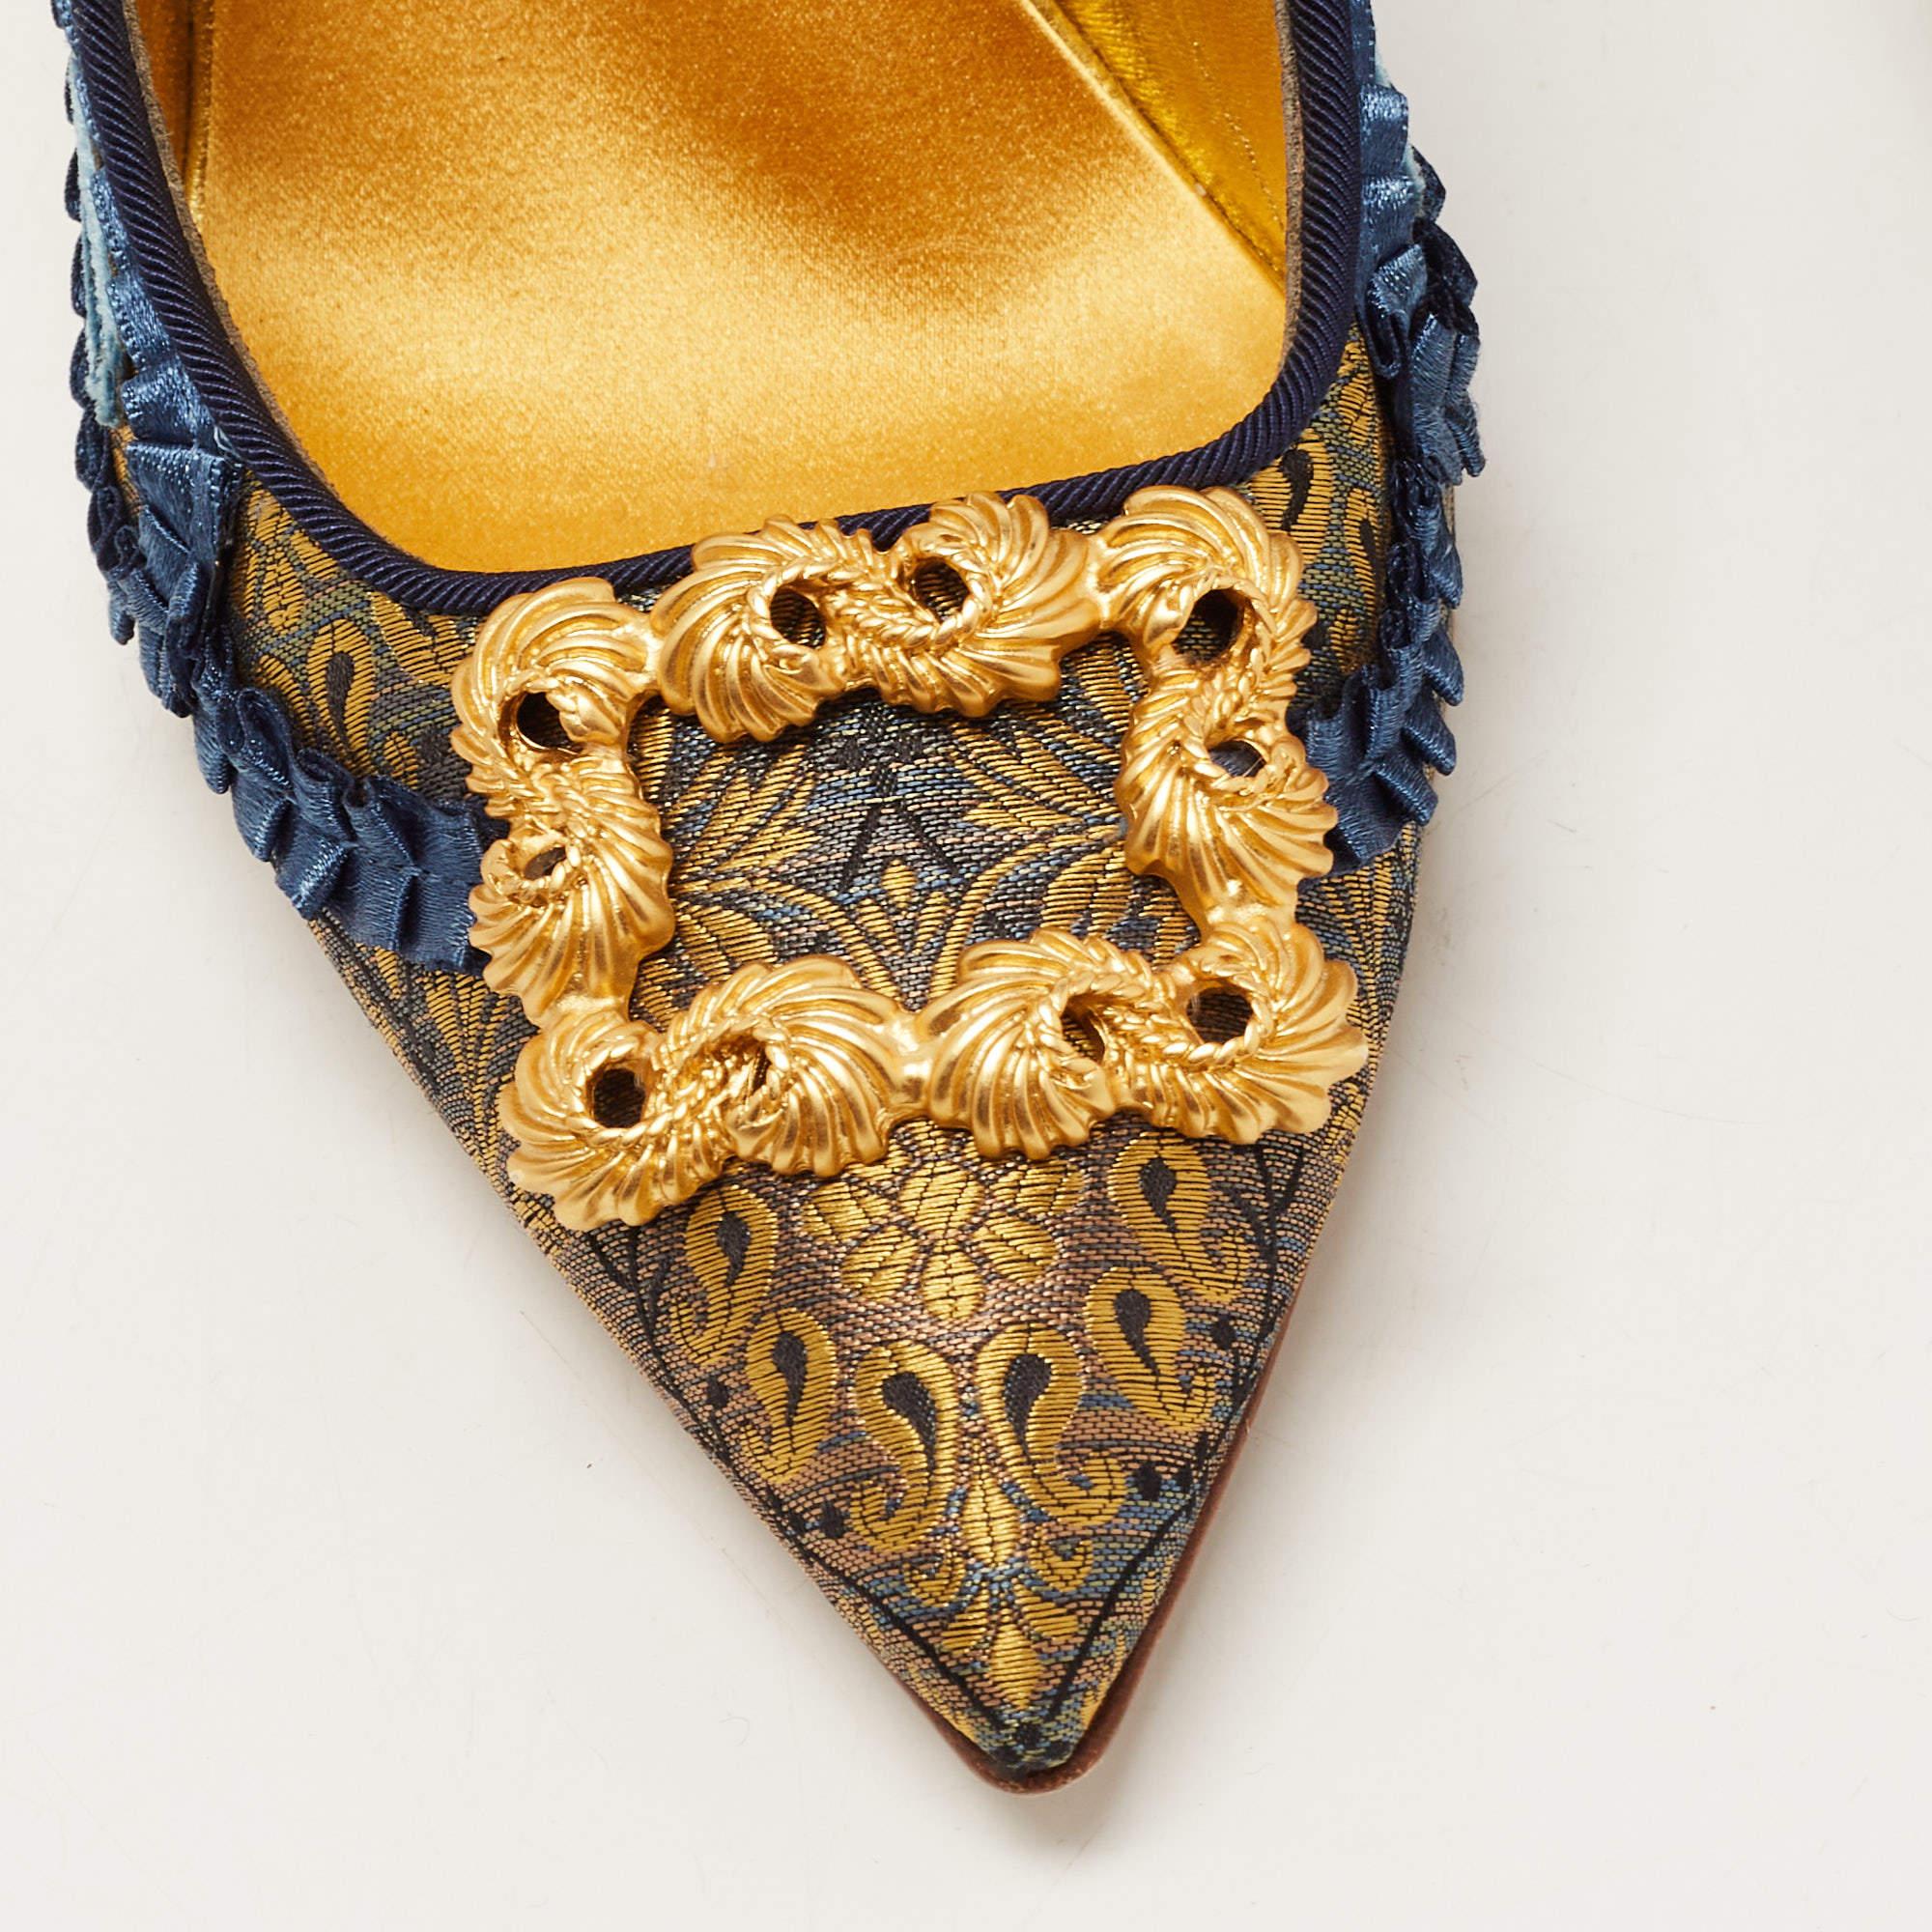 Women's Manolo Blahnik Blue/Gold Brocade Fabric Buckle Pumps Size 36